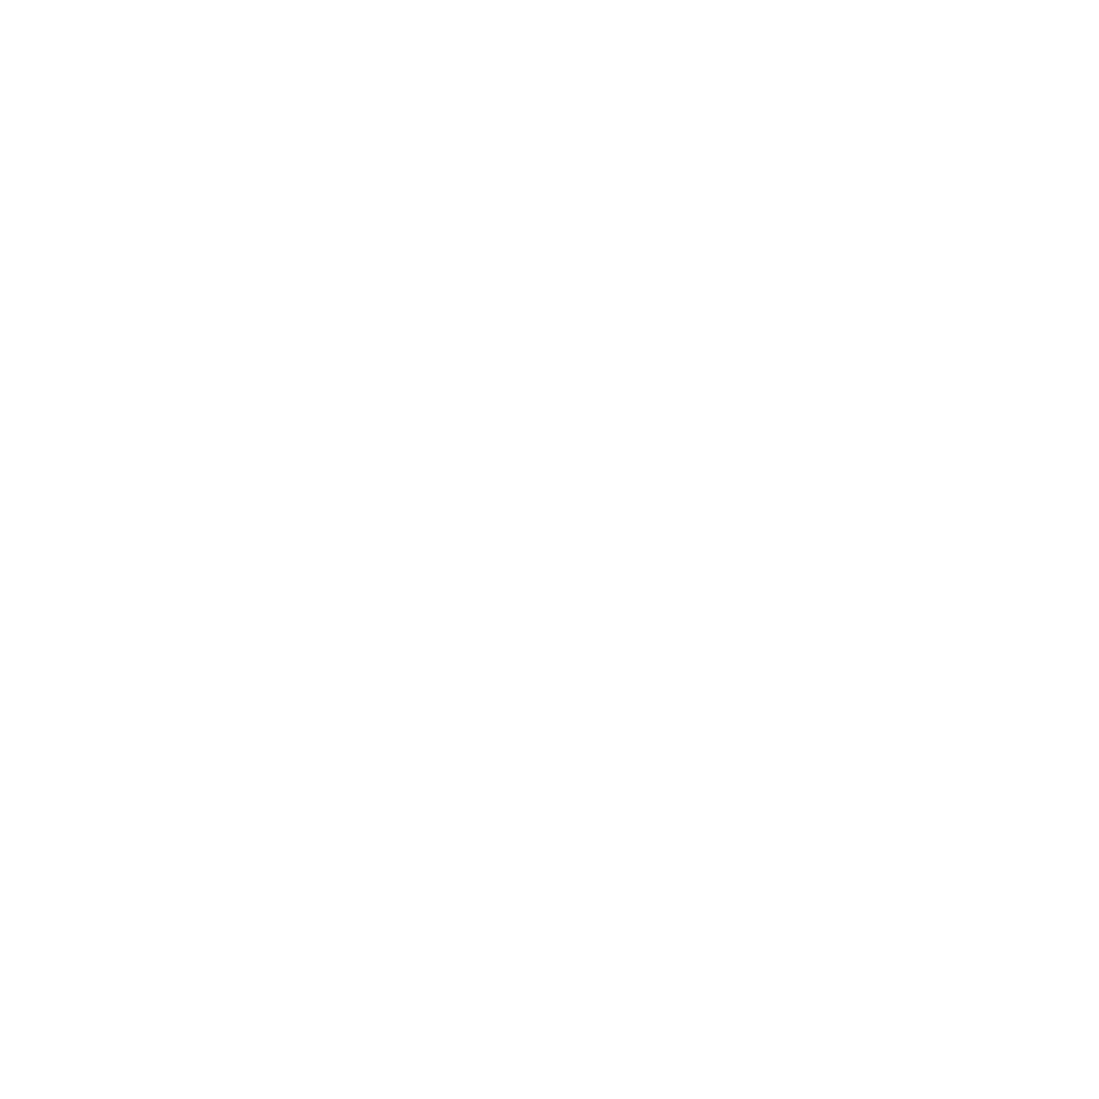 K-Lounge 長野の姉妹店ロゴ7